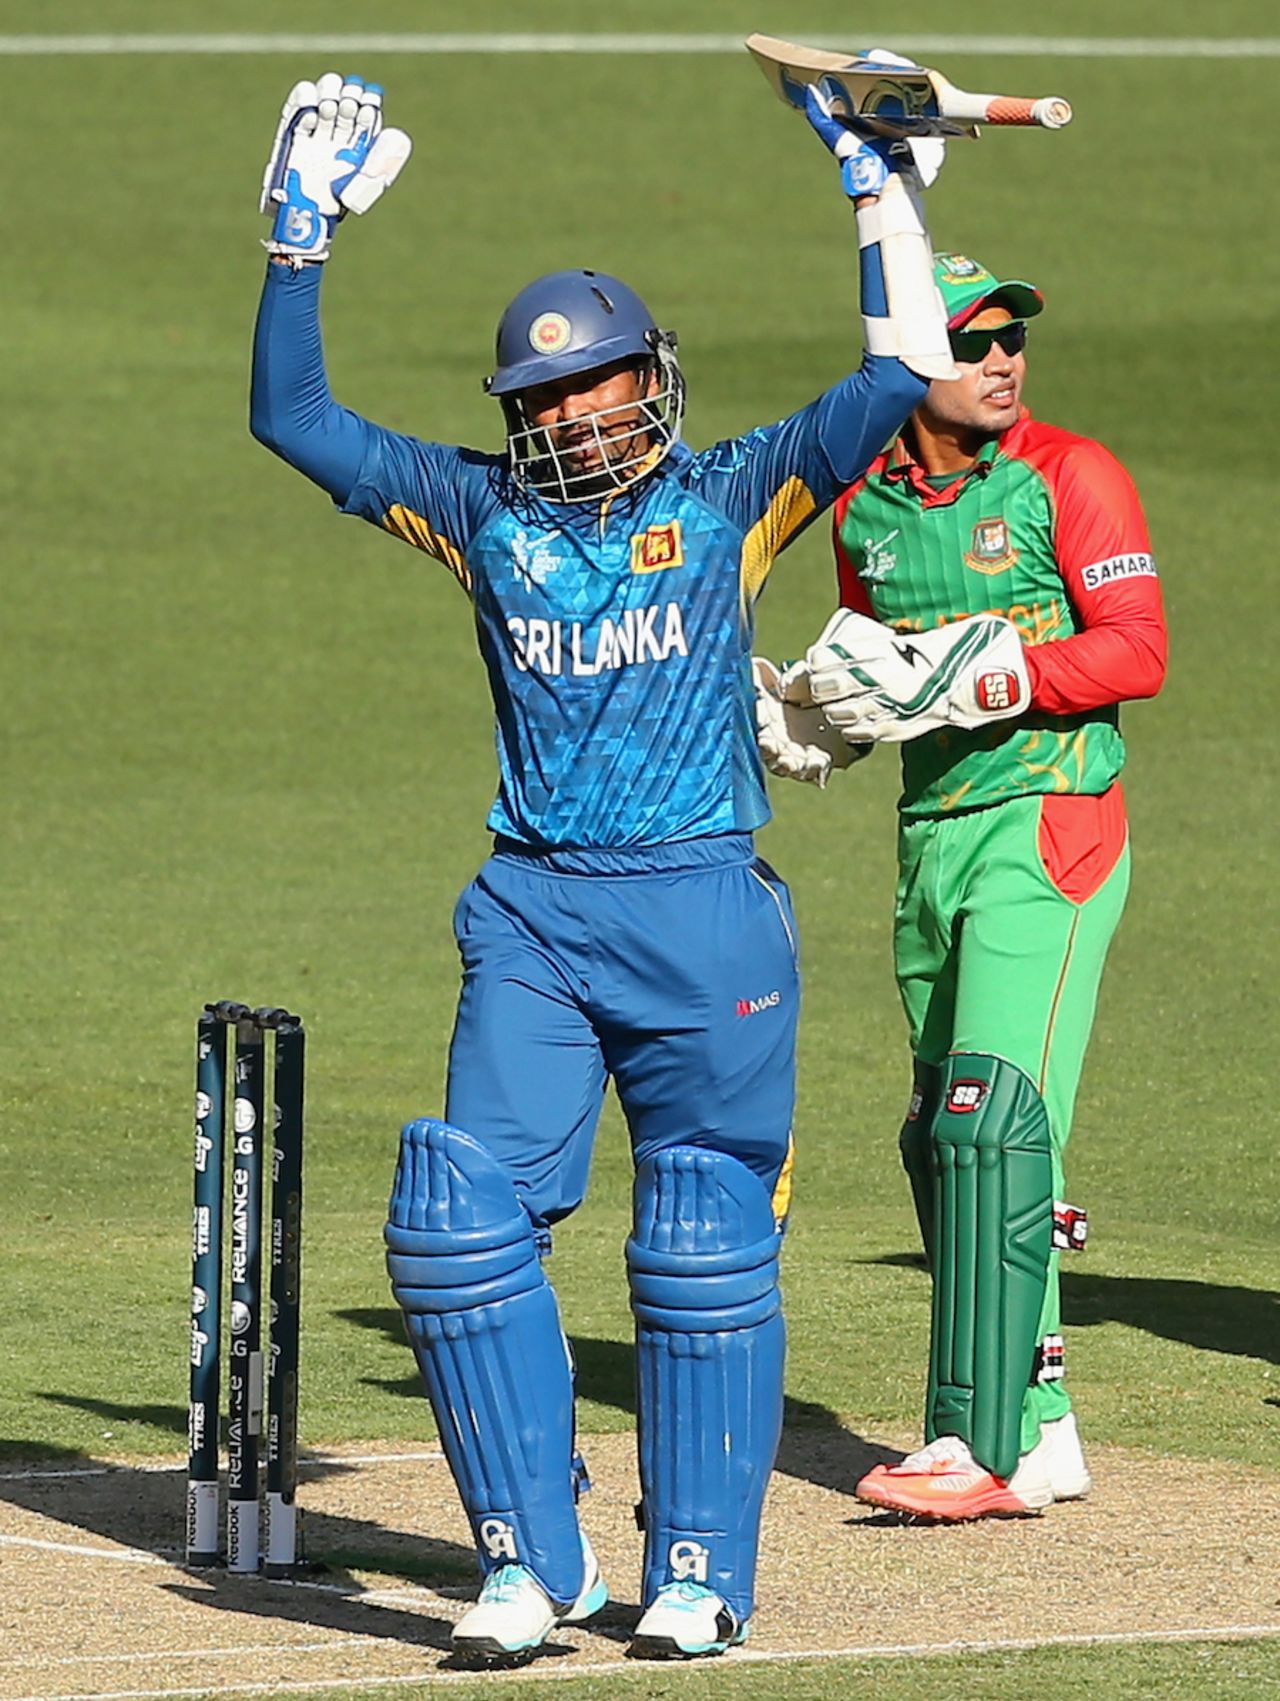 Tillakaratne Dilshan celebrates his 21st ODI hundred, Bangladesh v Sri Lanka, World Cup 2015, Group A, Melbourne, February 26, 2015